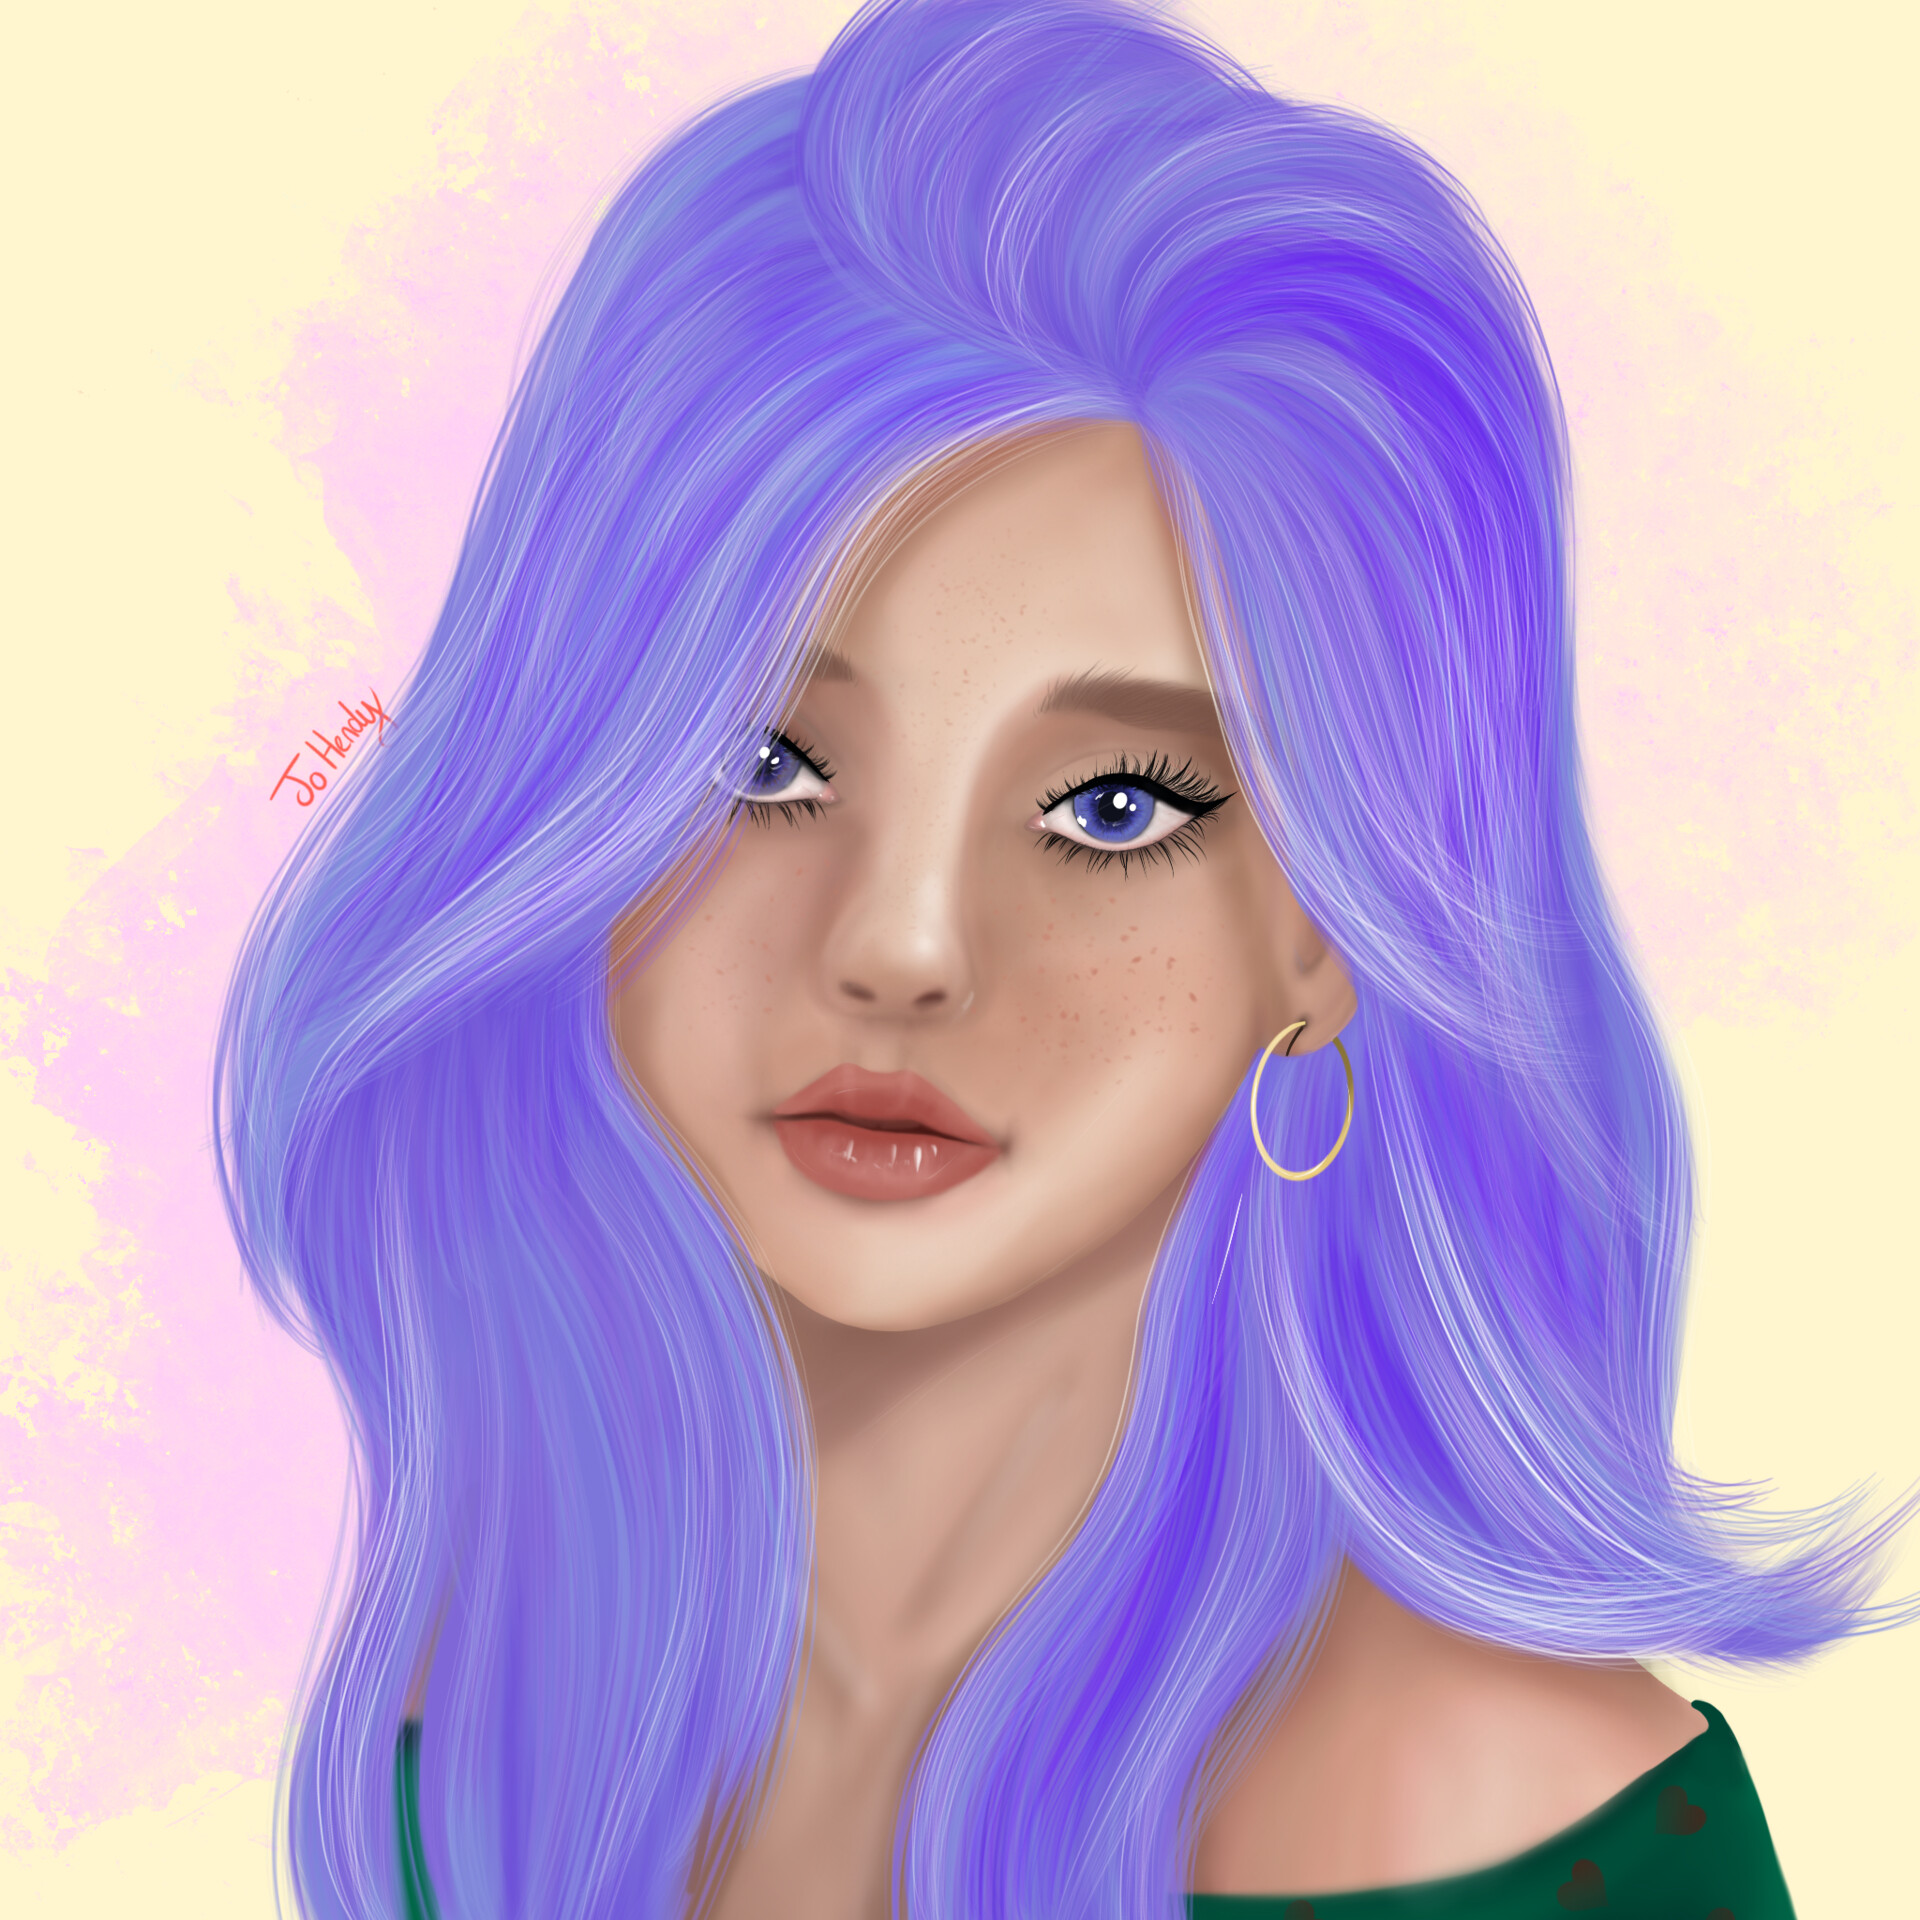 ArtStation - Purple hair lady